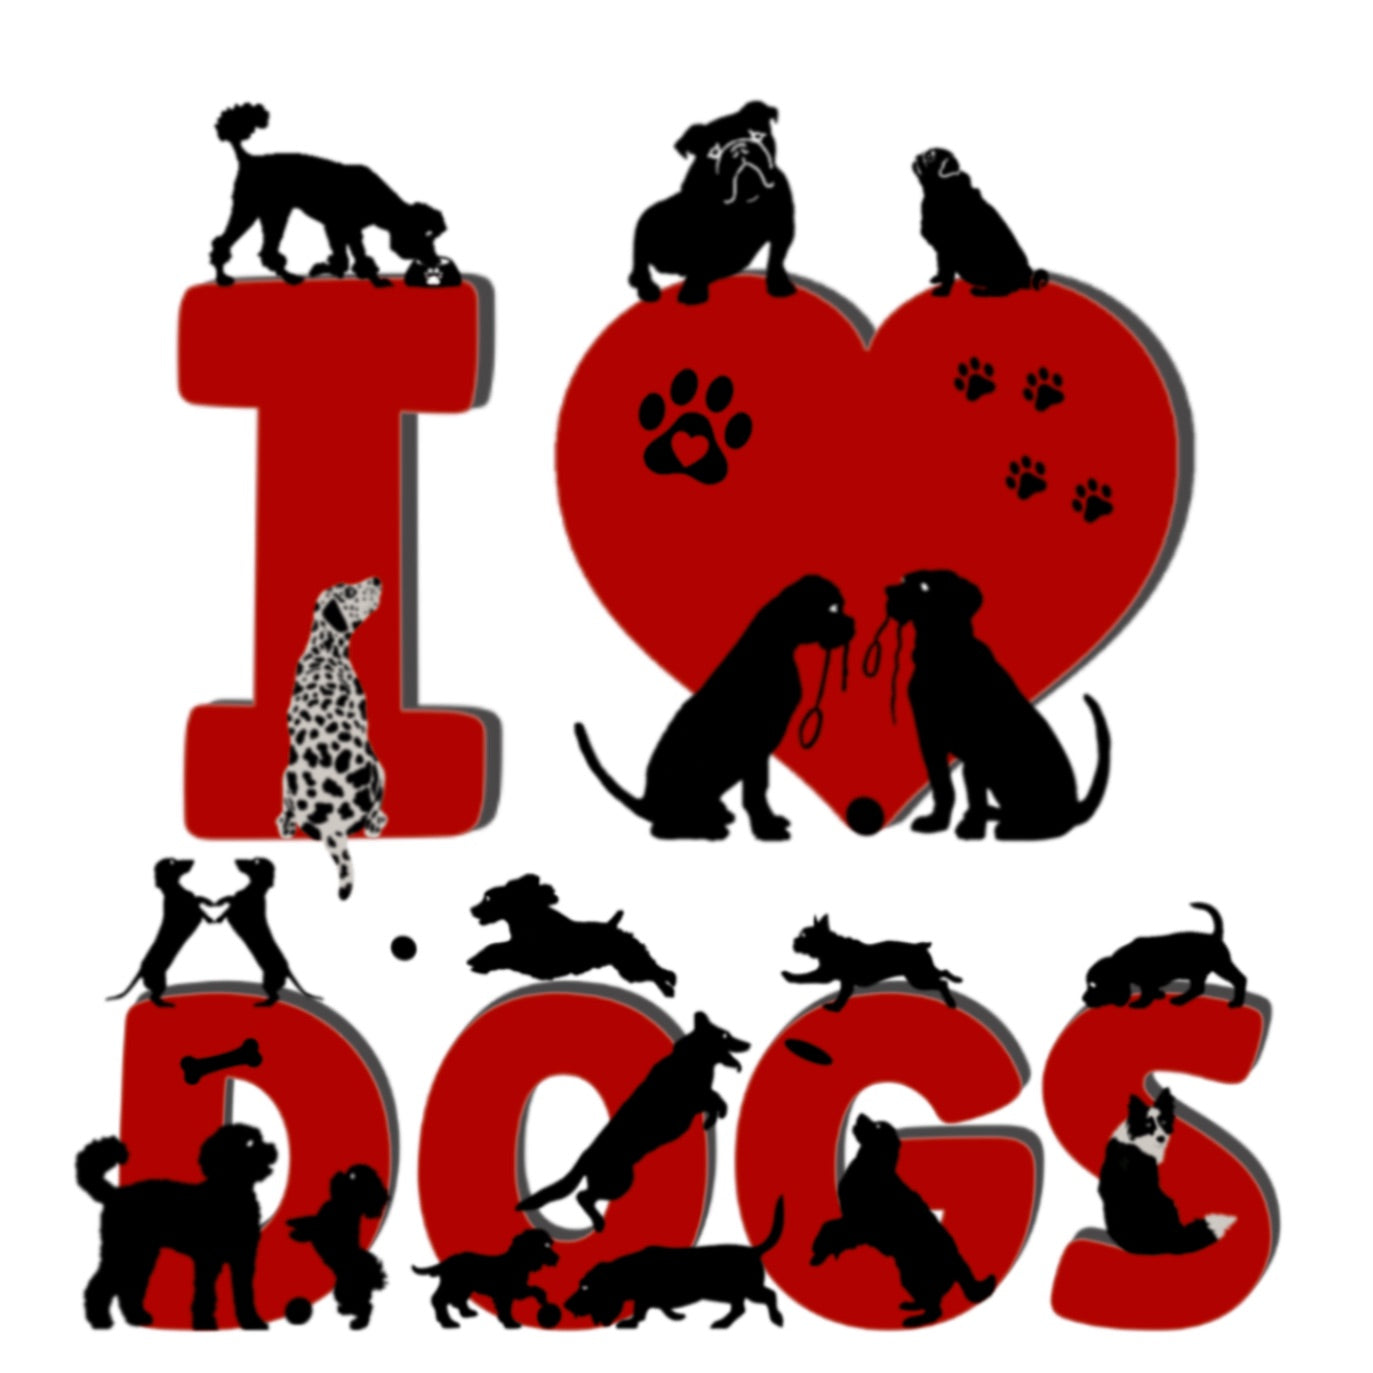 I Love Dogs Silhouette Art Square Personalised Coaster Gift Idea